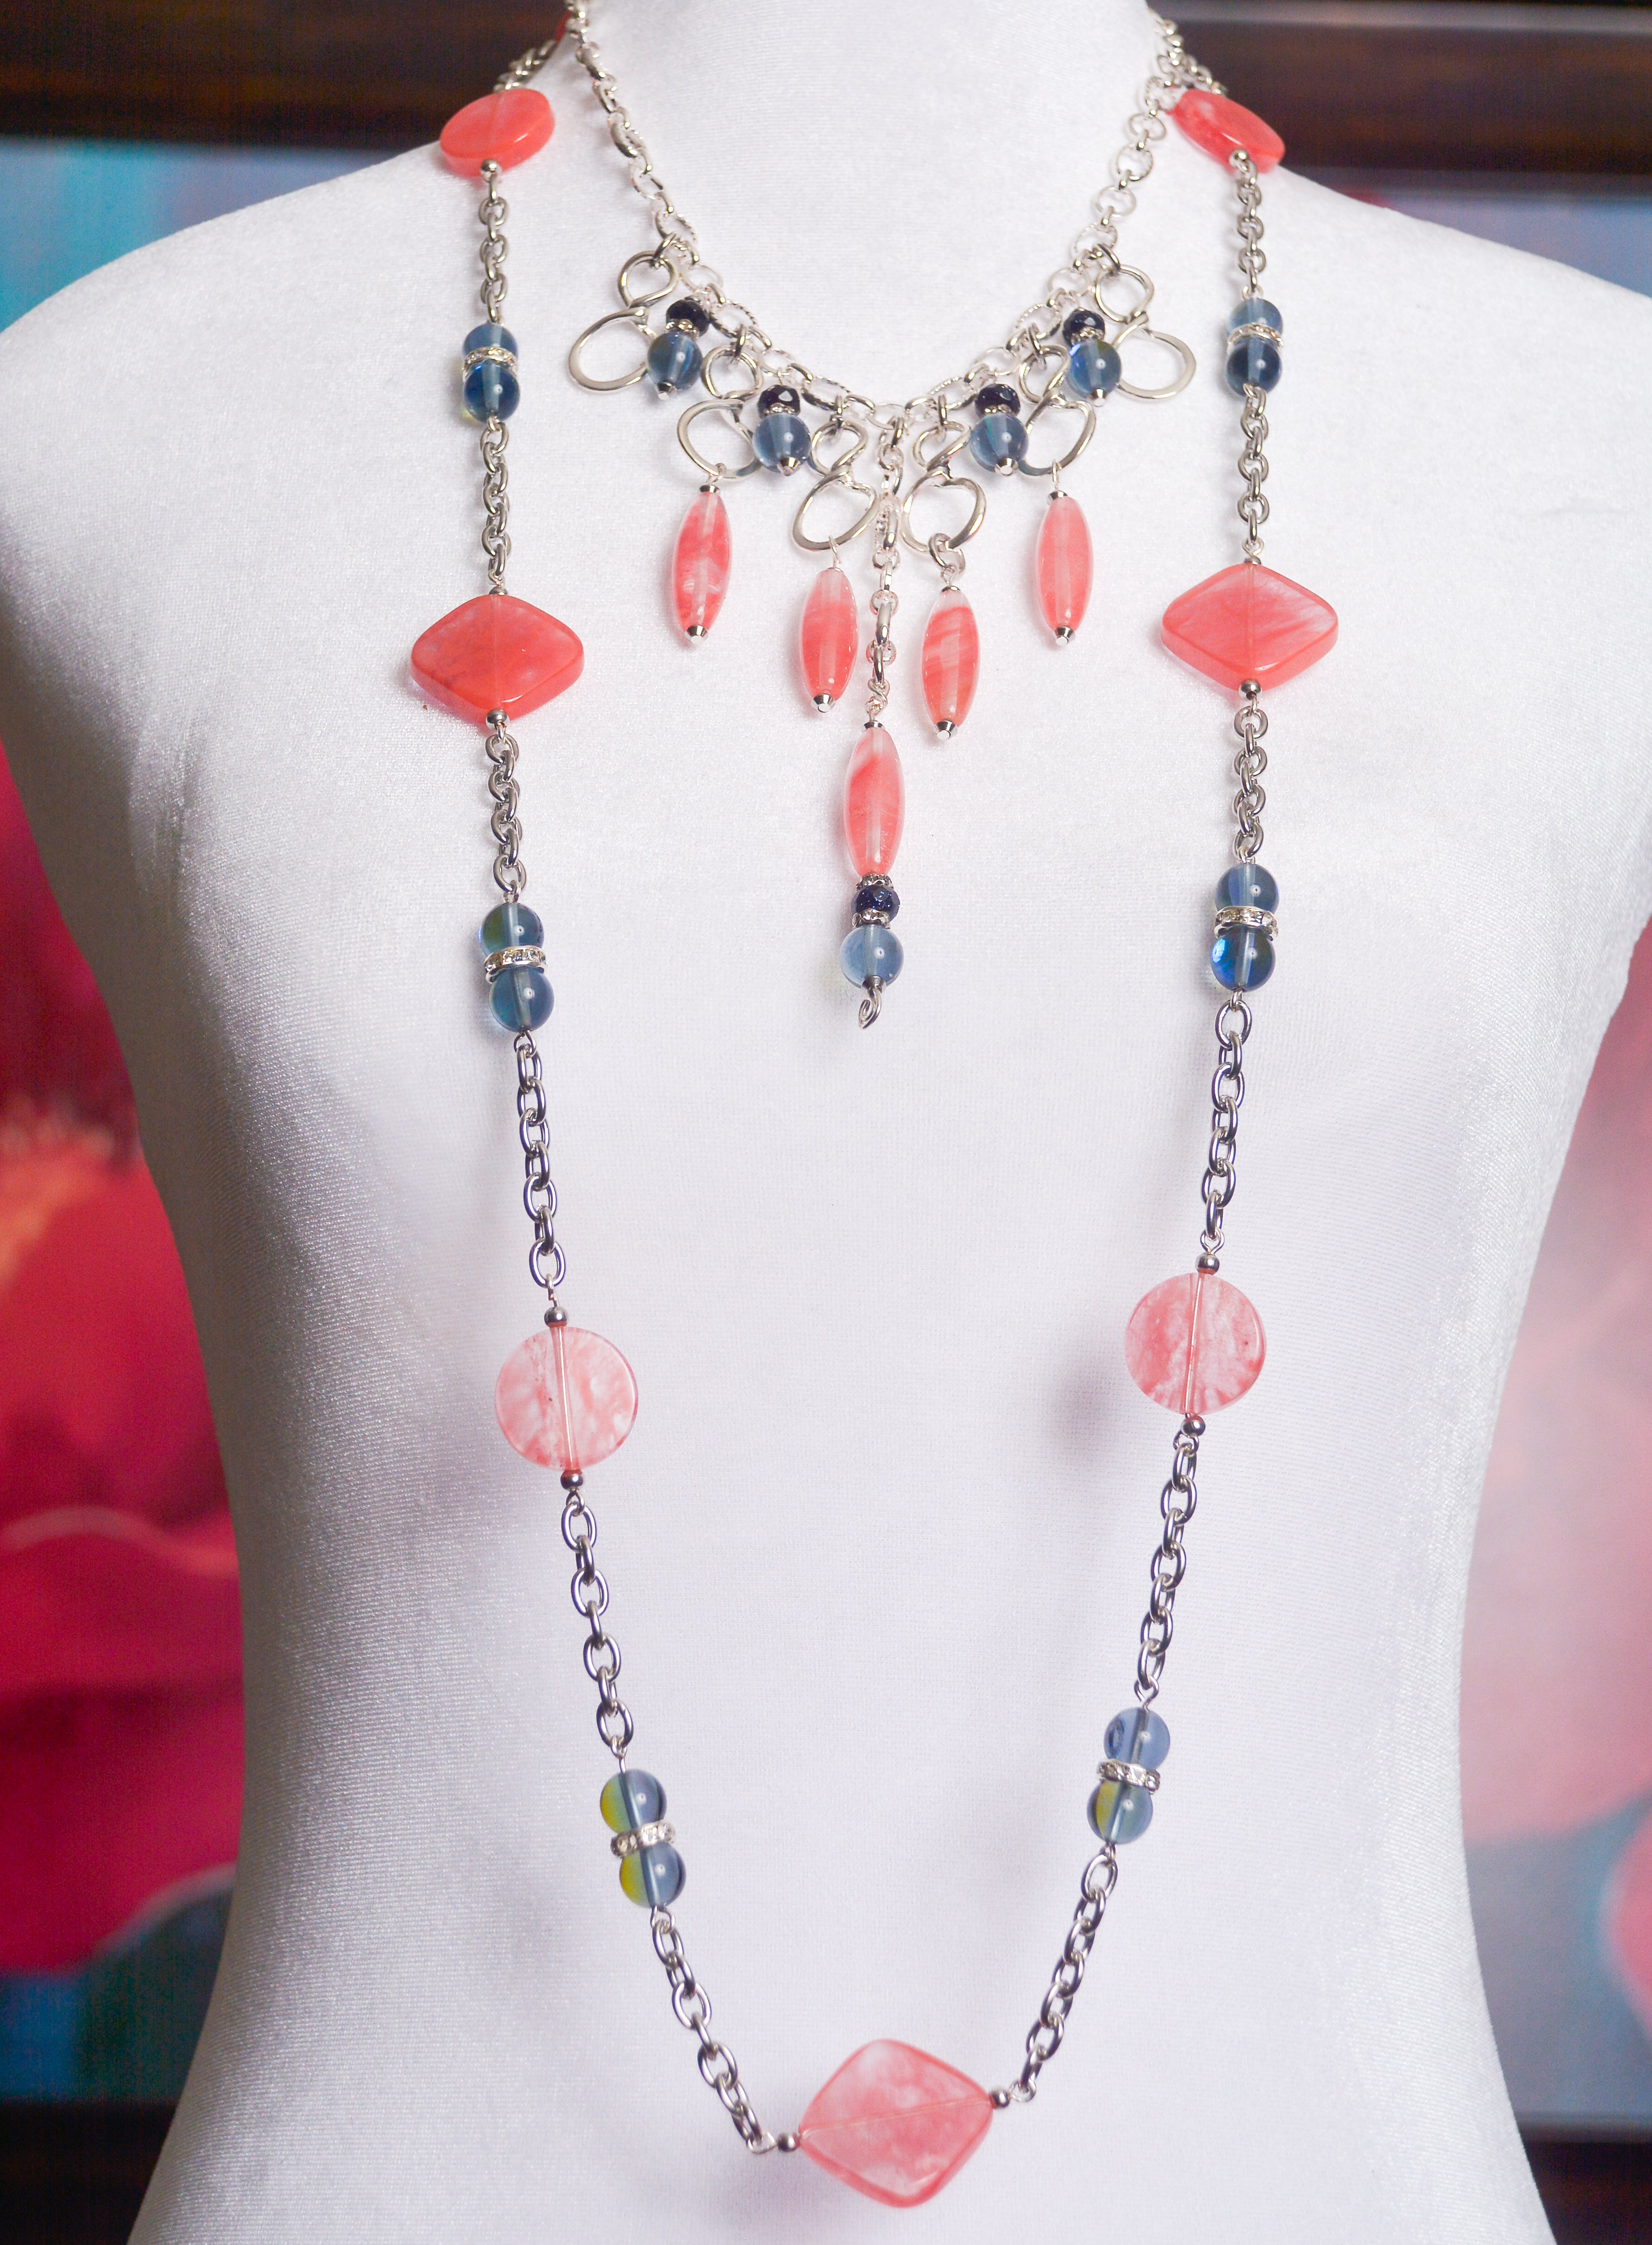 Celestial Harmony Bib Necklace: Blue Mystic Quartz & Strawberry Quartz